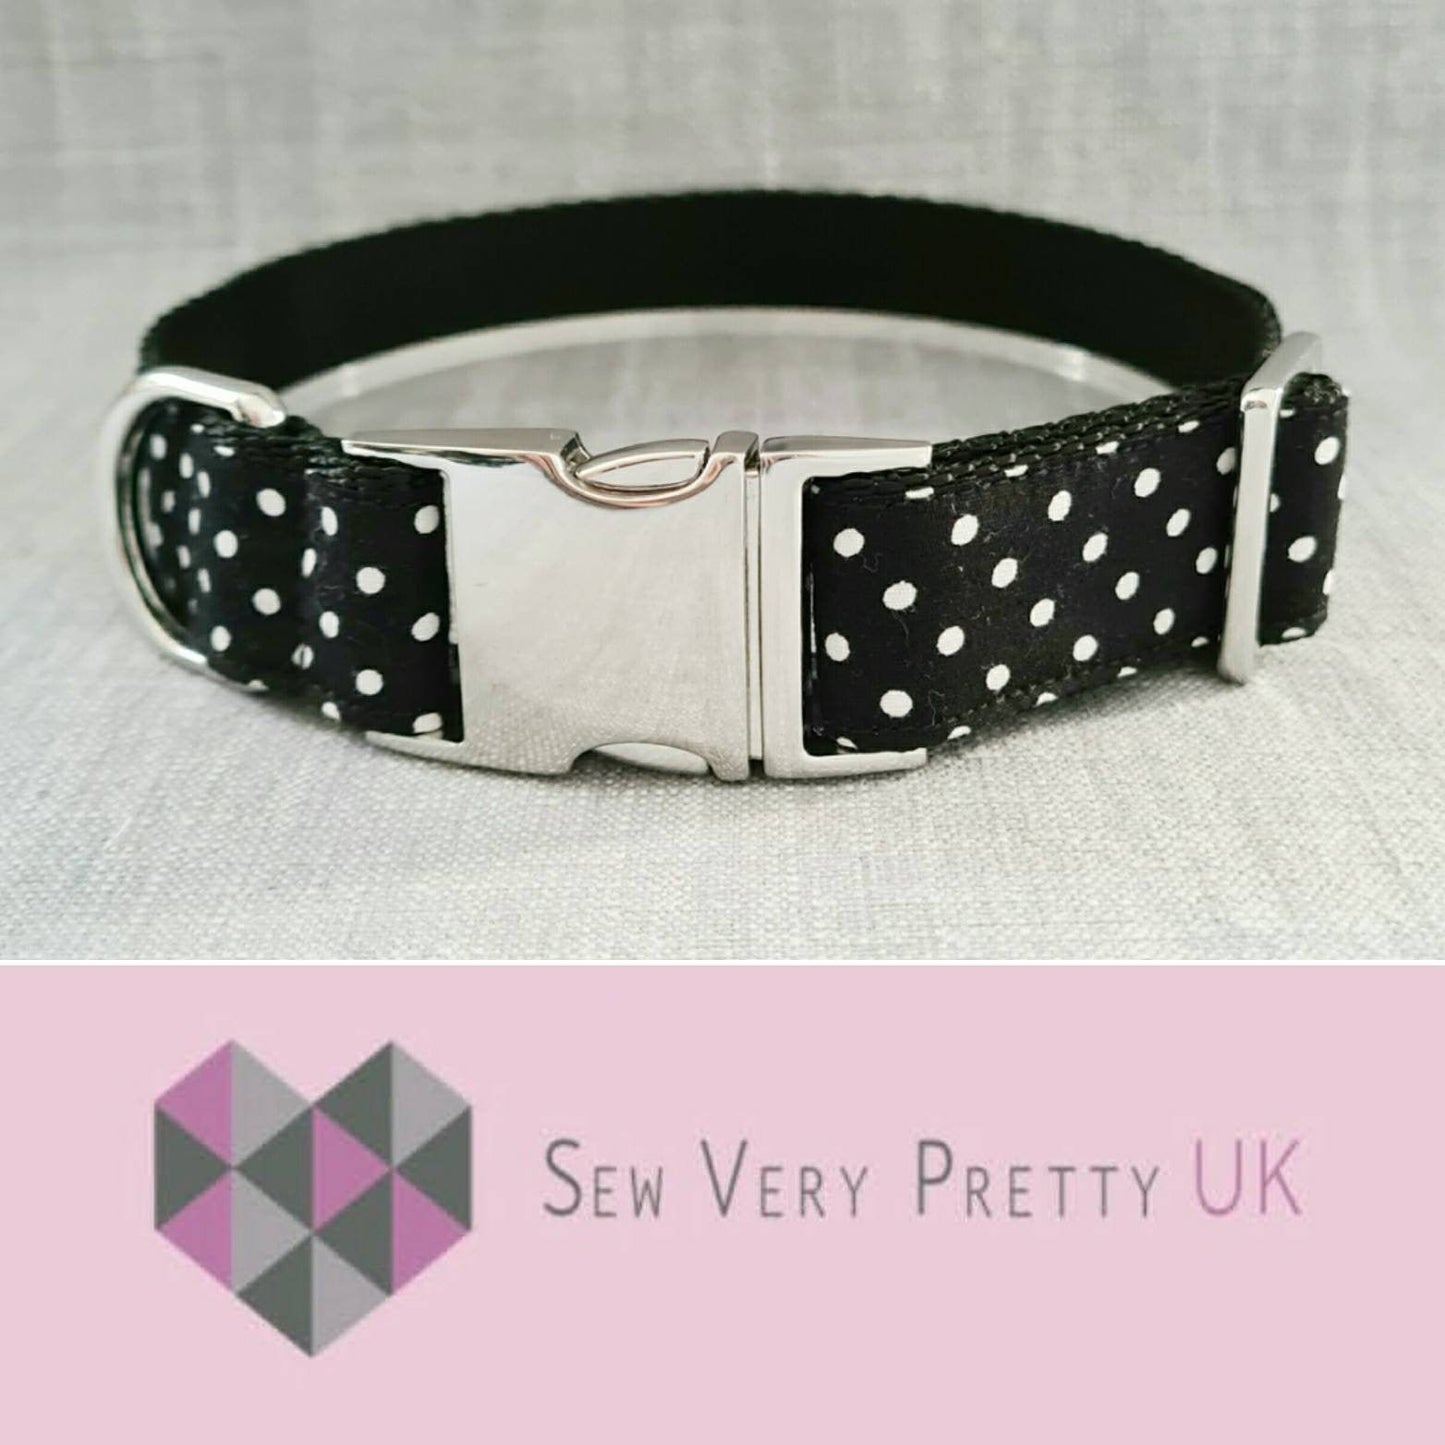 Black and white polka dot dog collar